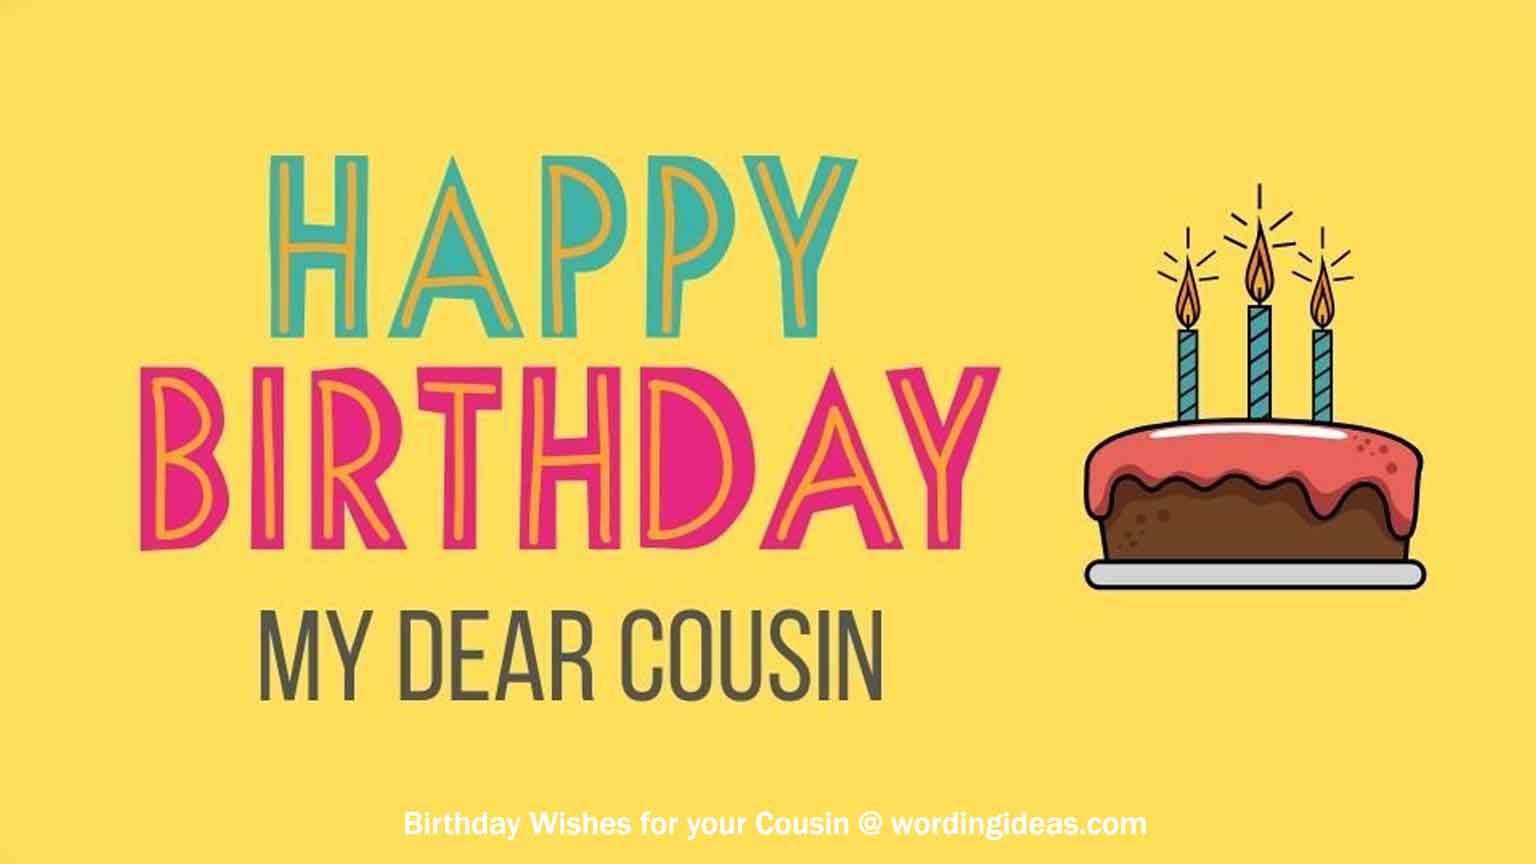 happy birthday dear cousin